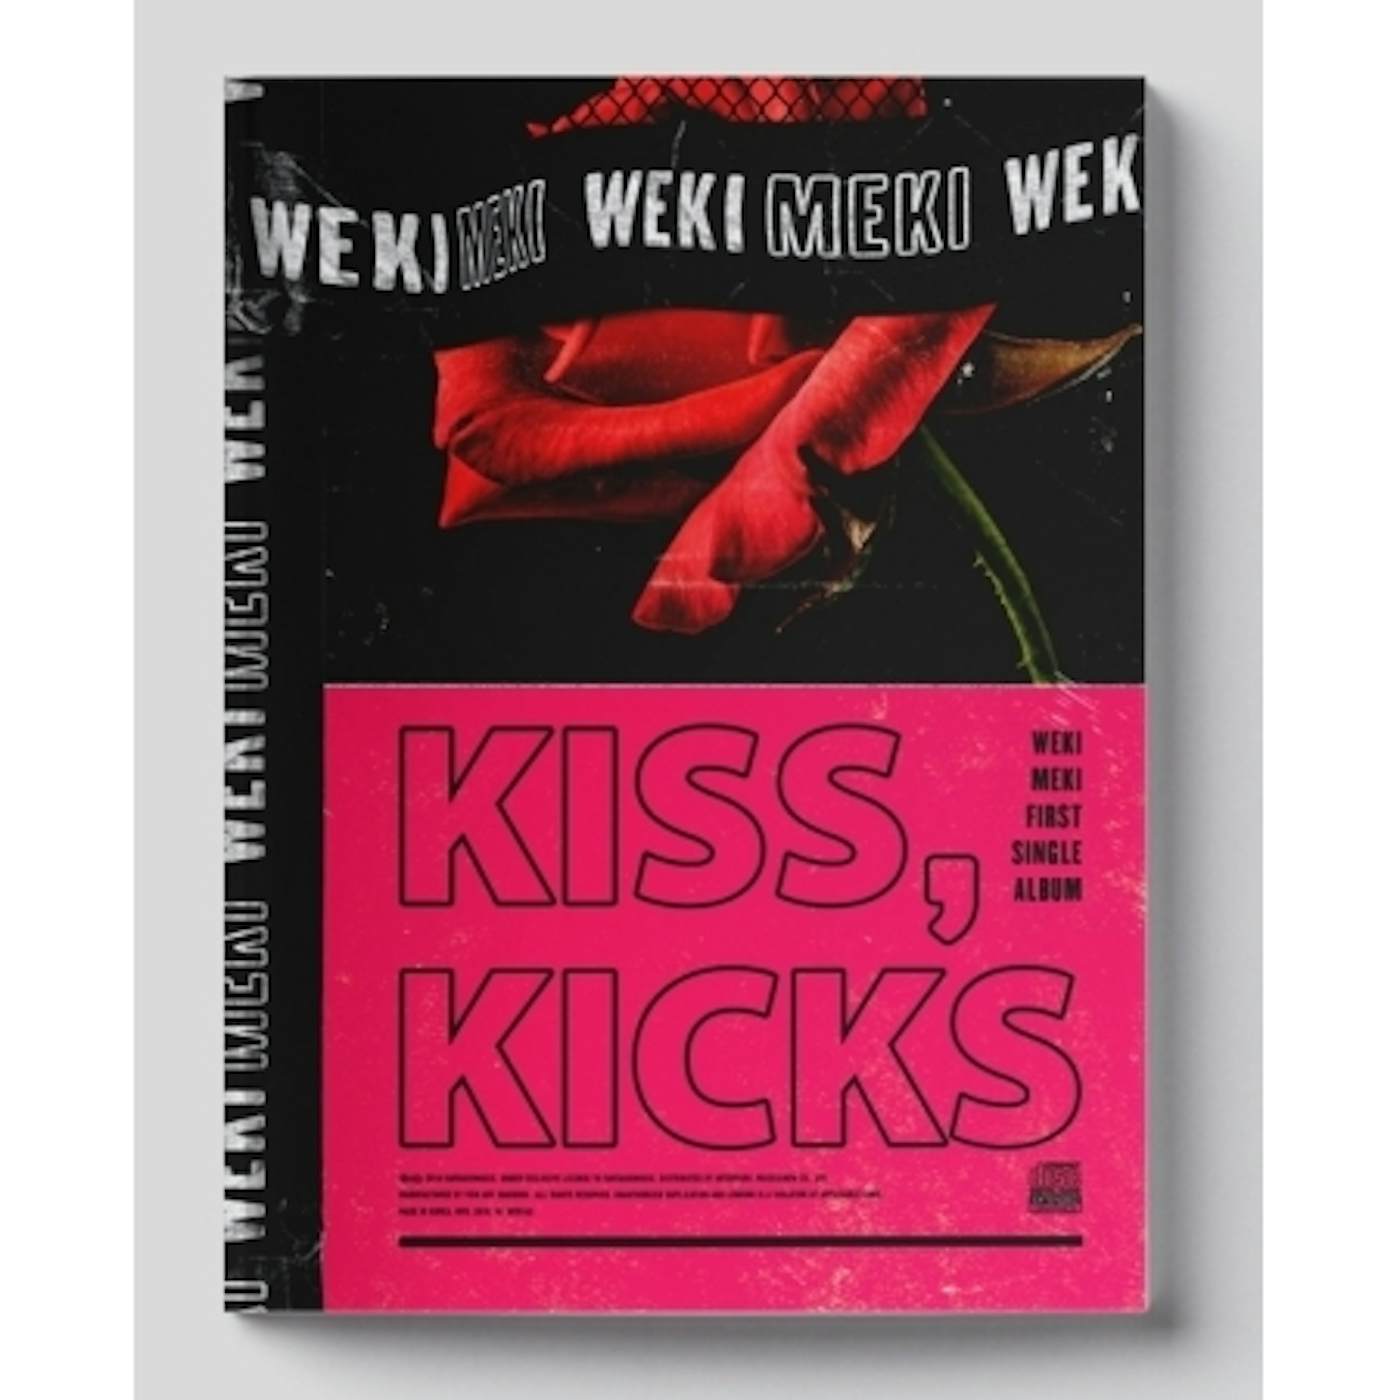 Weki Meki KISS KICKS (KISS VERSION) CD